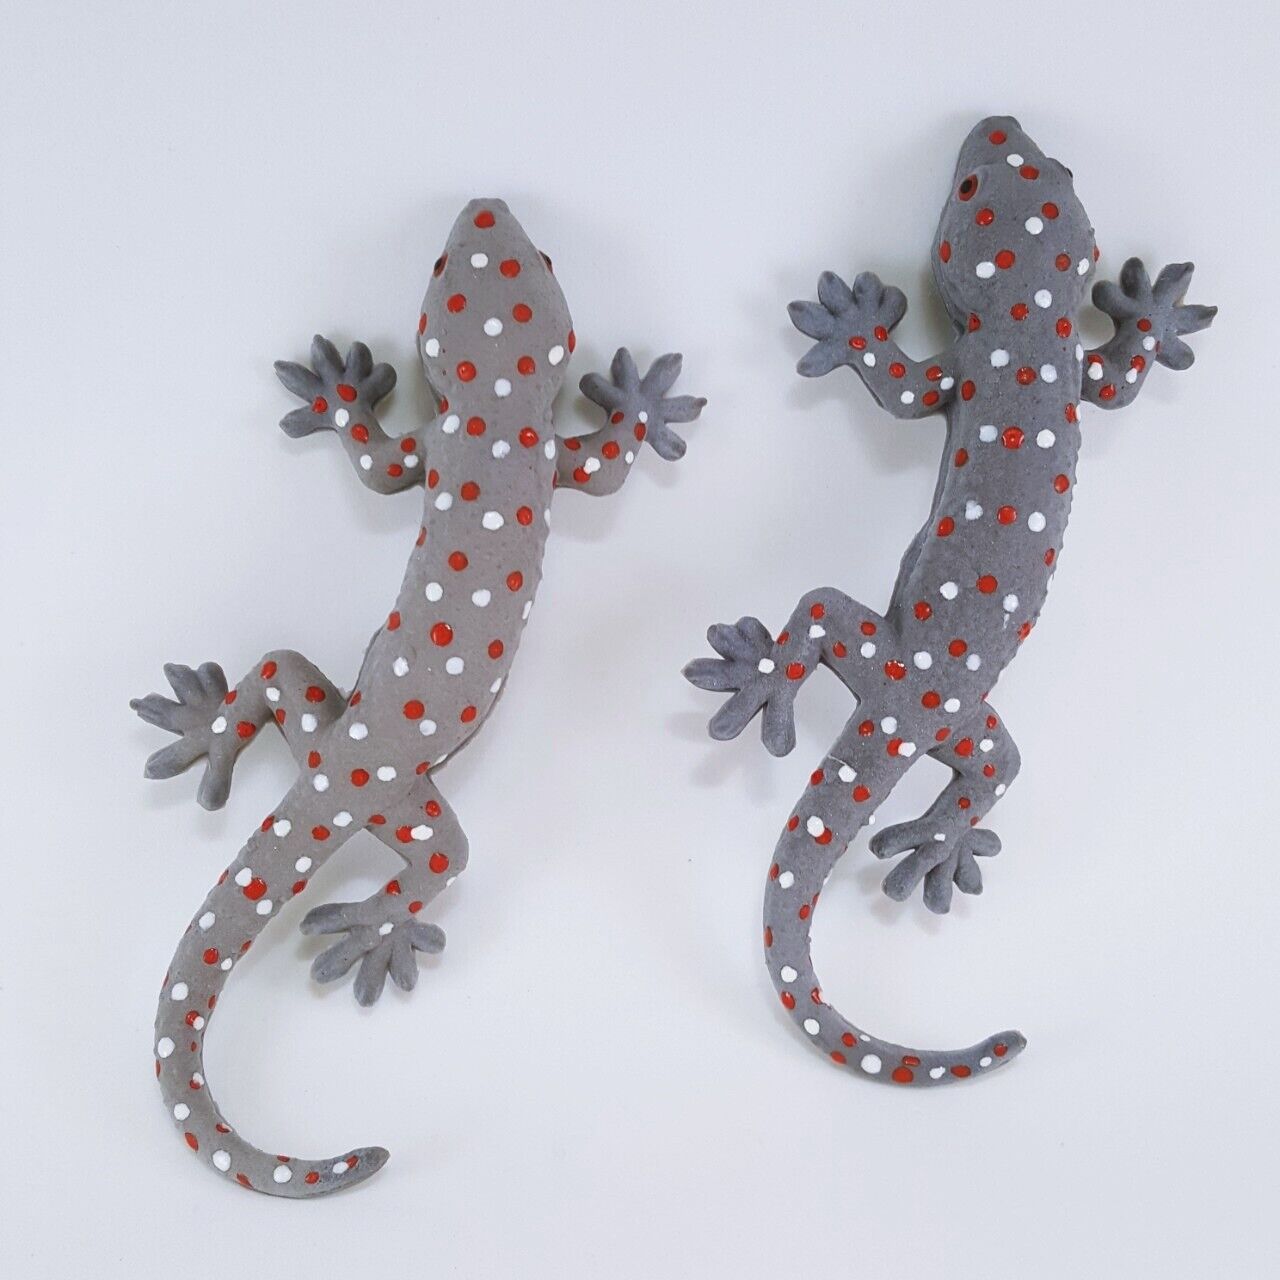 2x Rubber Gecko Realistic Fake Reptide Animal Kid Toy Lure Bait Garden Prank